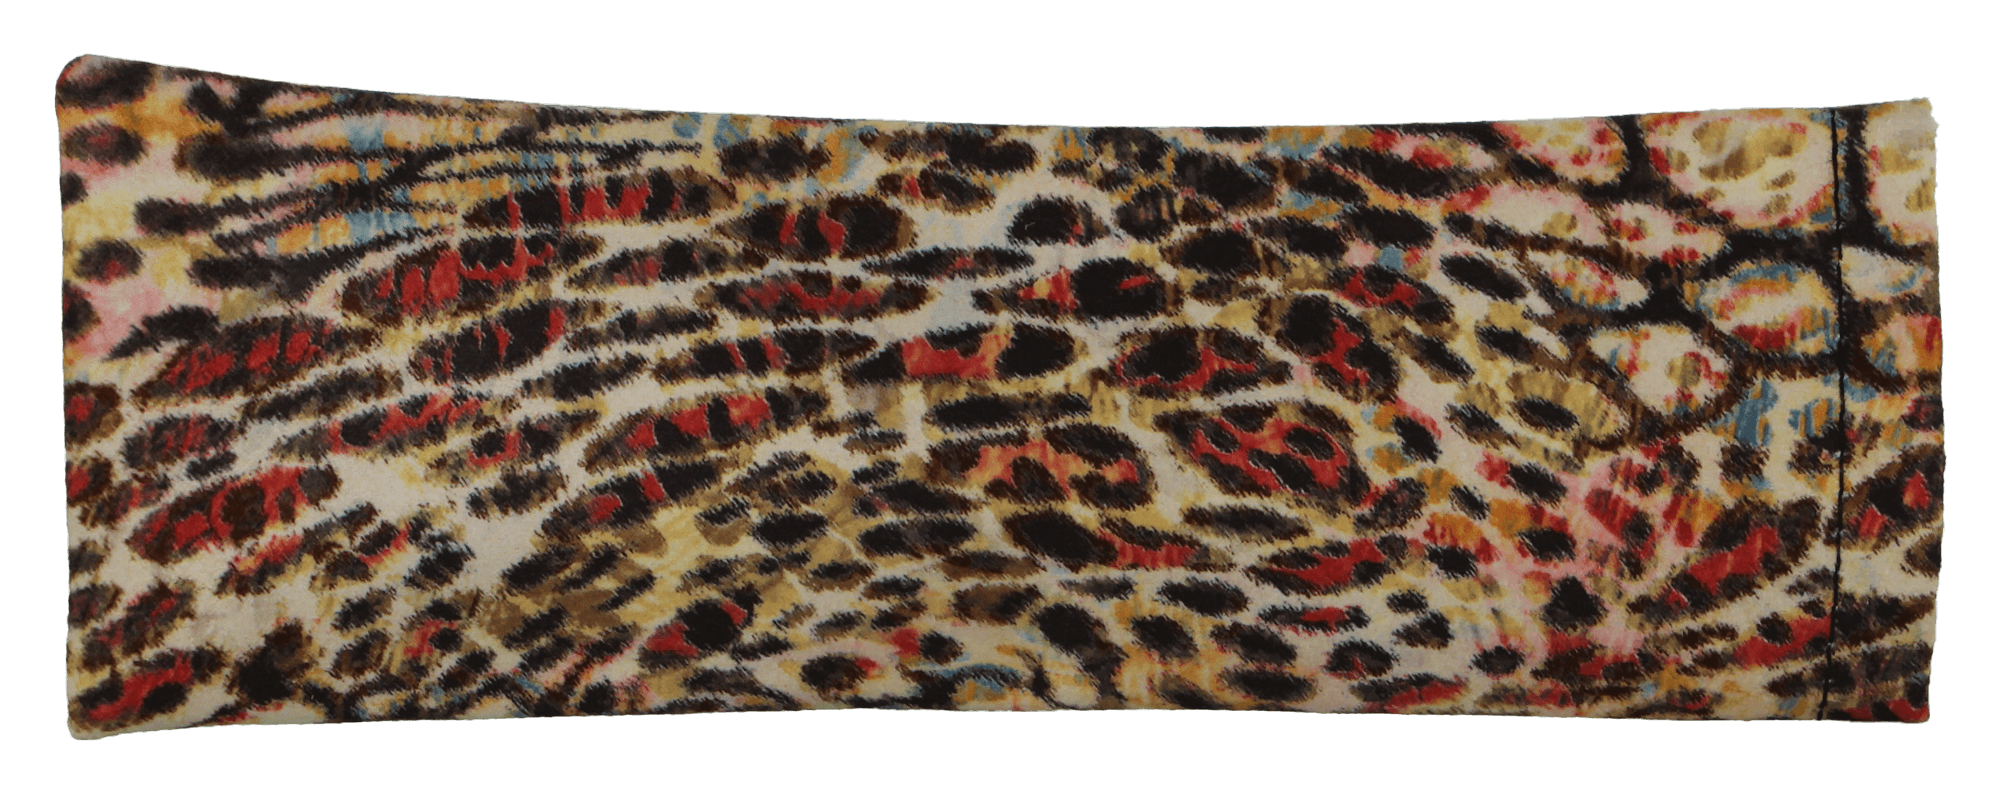 Fertiglesebrille 04891 Leoparden-Print matt +3,00 Dioptrien